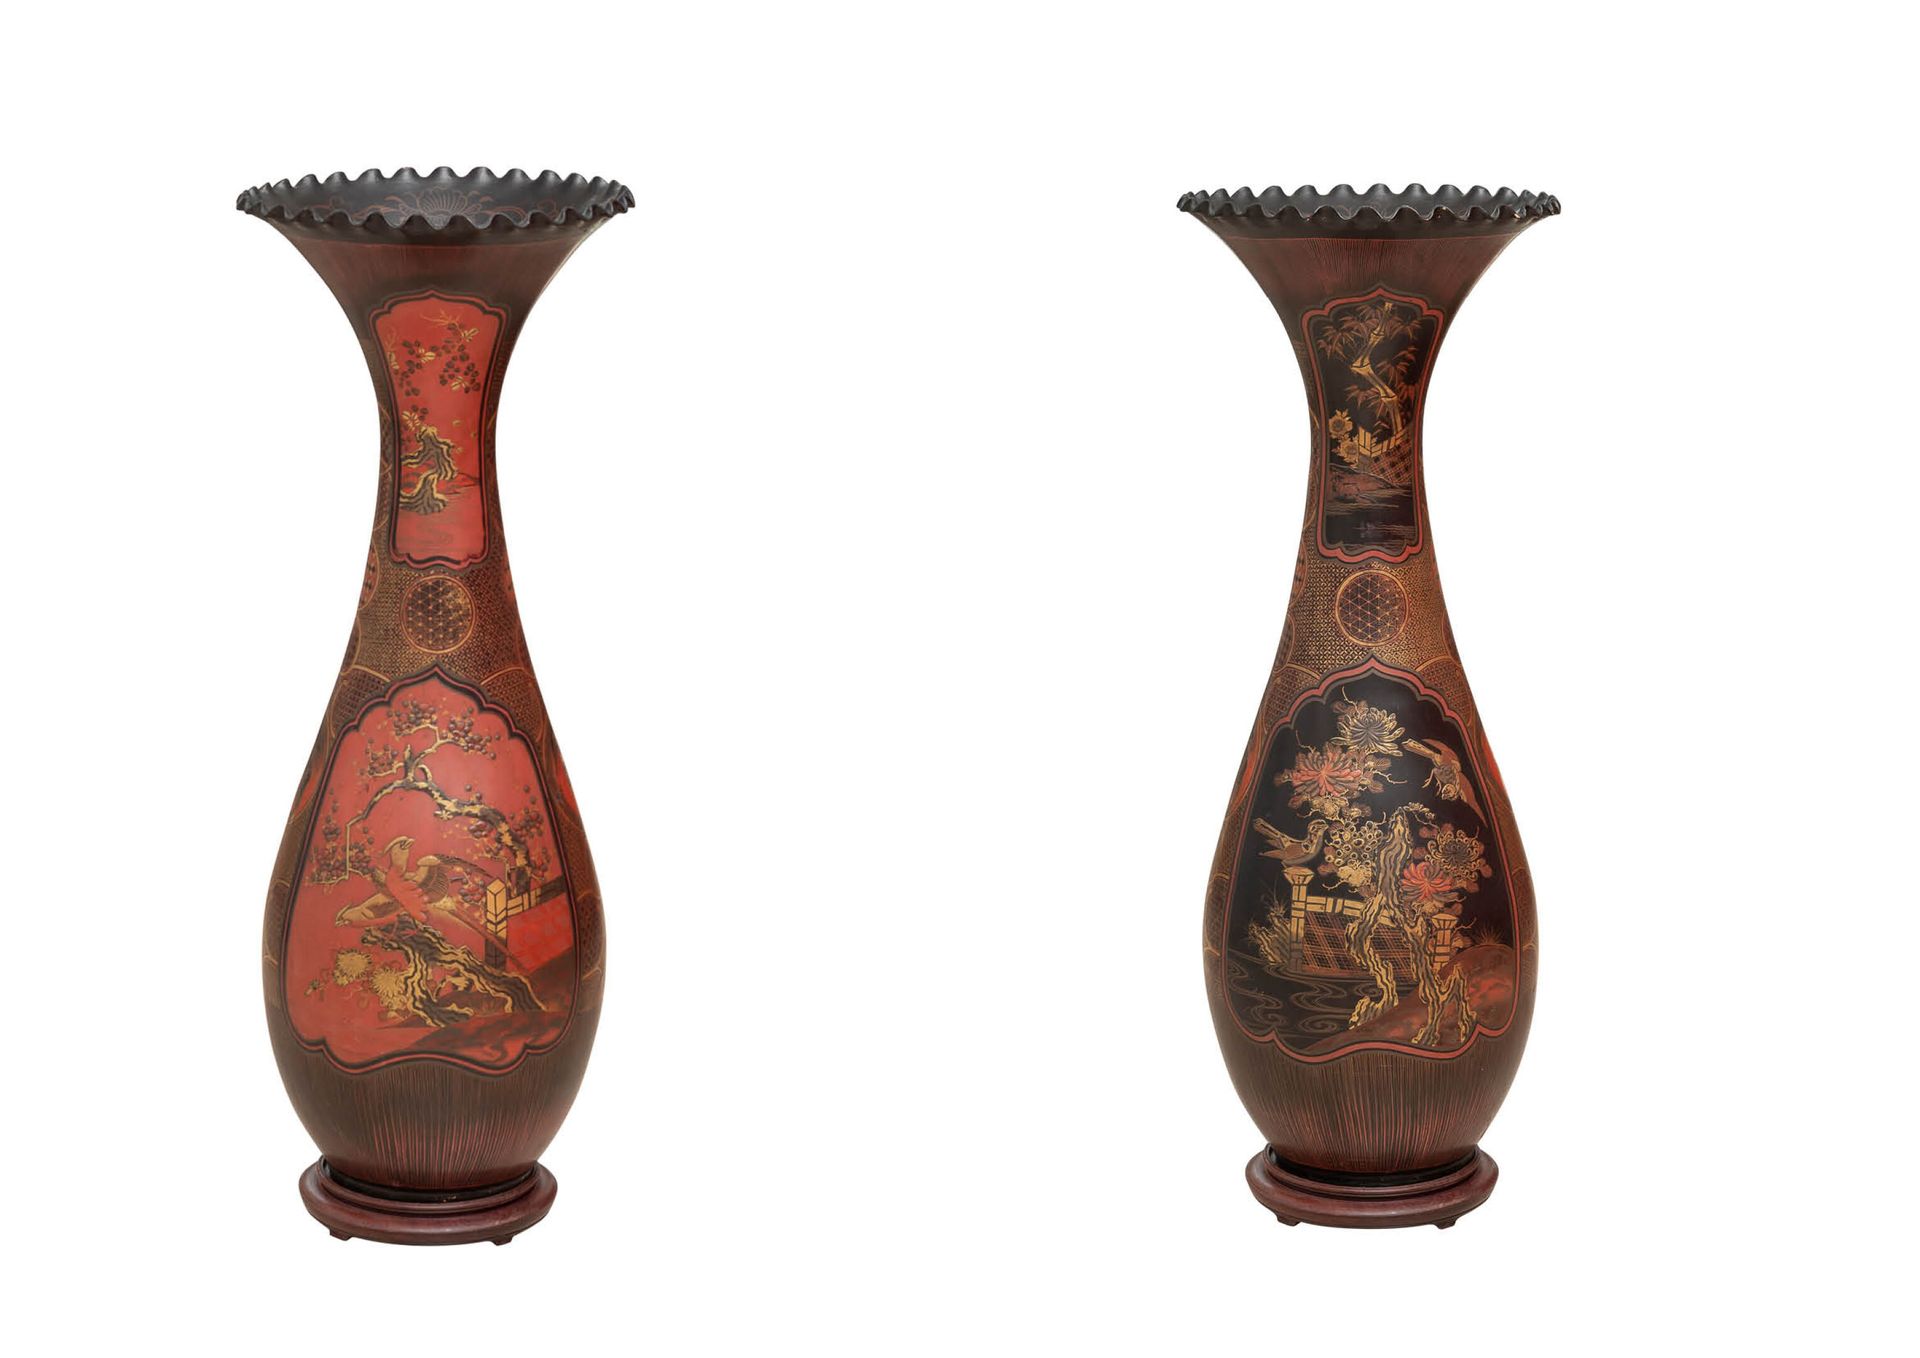 JAPON, époque Meiji (1868-1912) 一个大型的黑、红、金漆的瓷质阳台花瓶，颈部呈喇叭状，在黑底上装饰着鸟、花和几何图案。

颈部内侧&hellip;